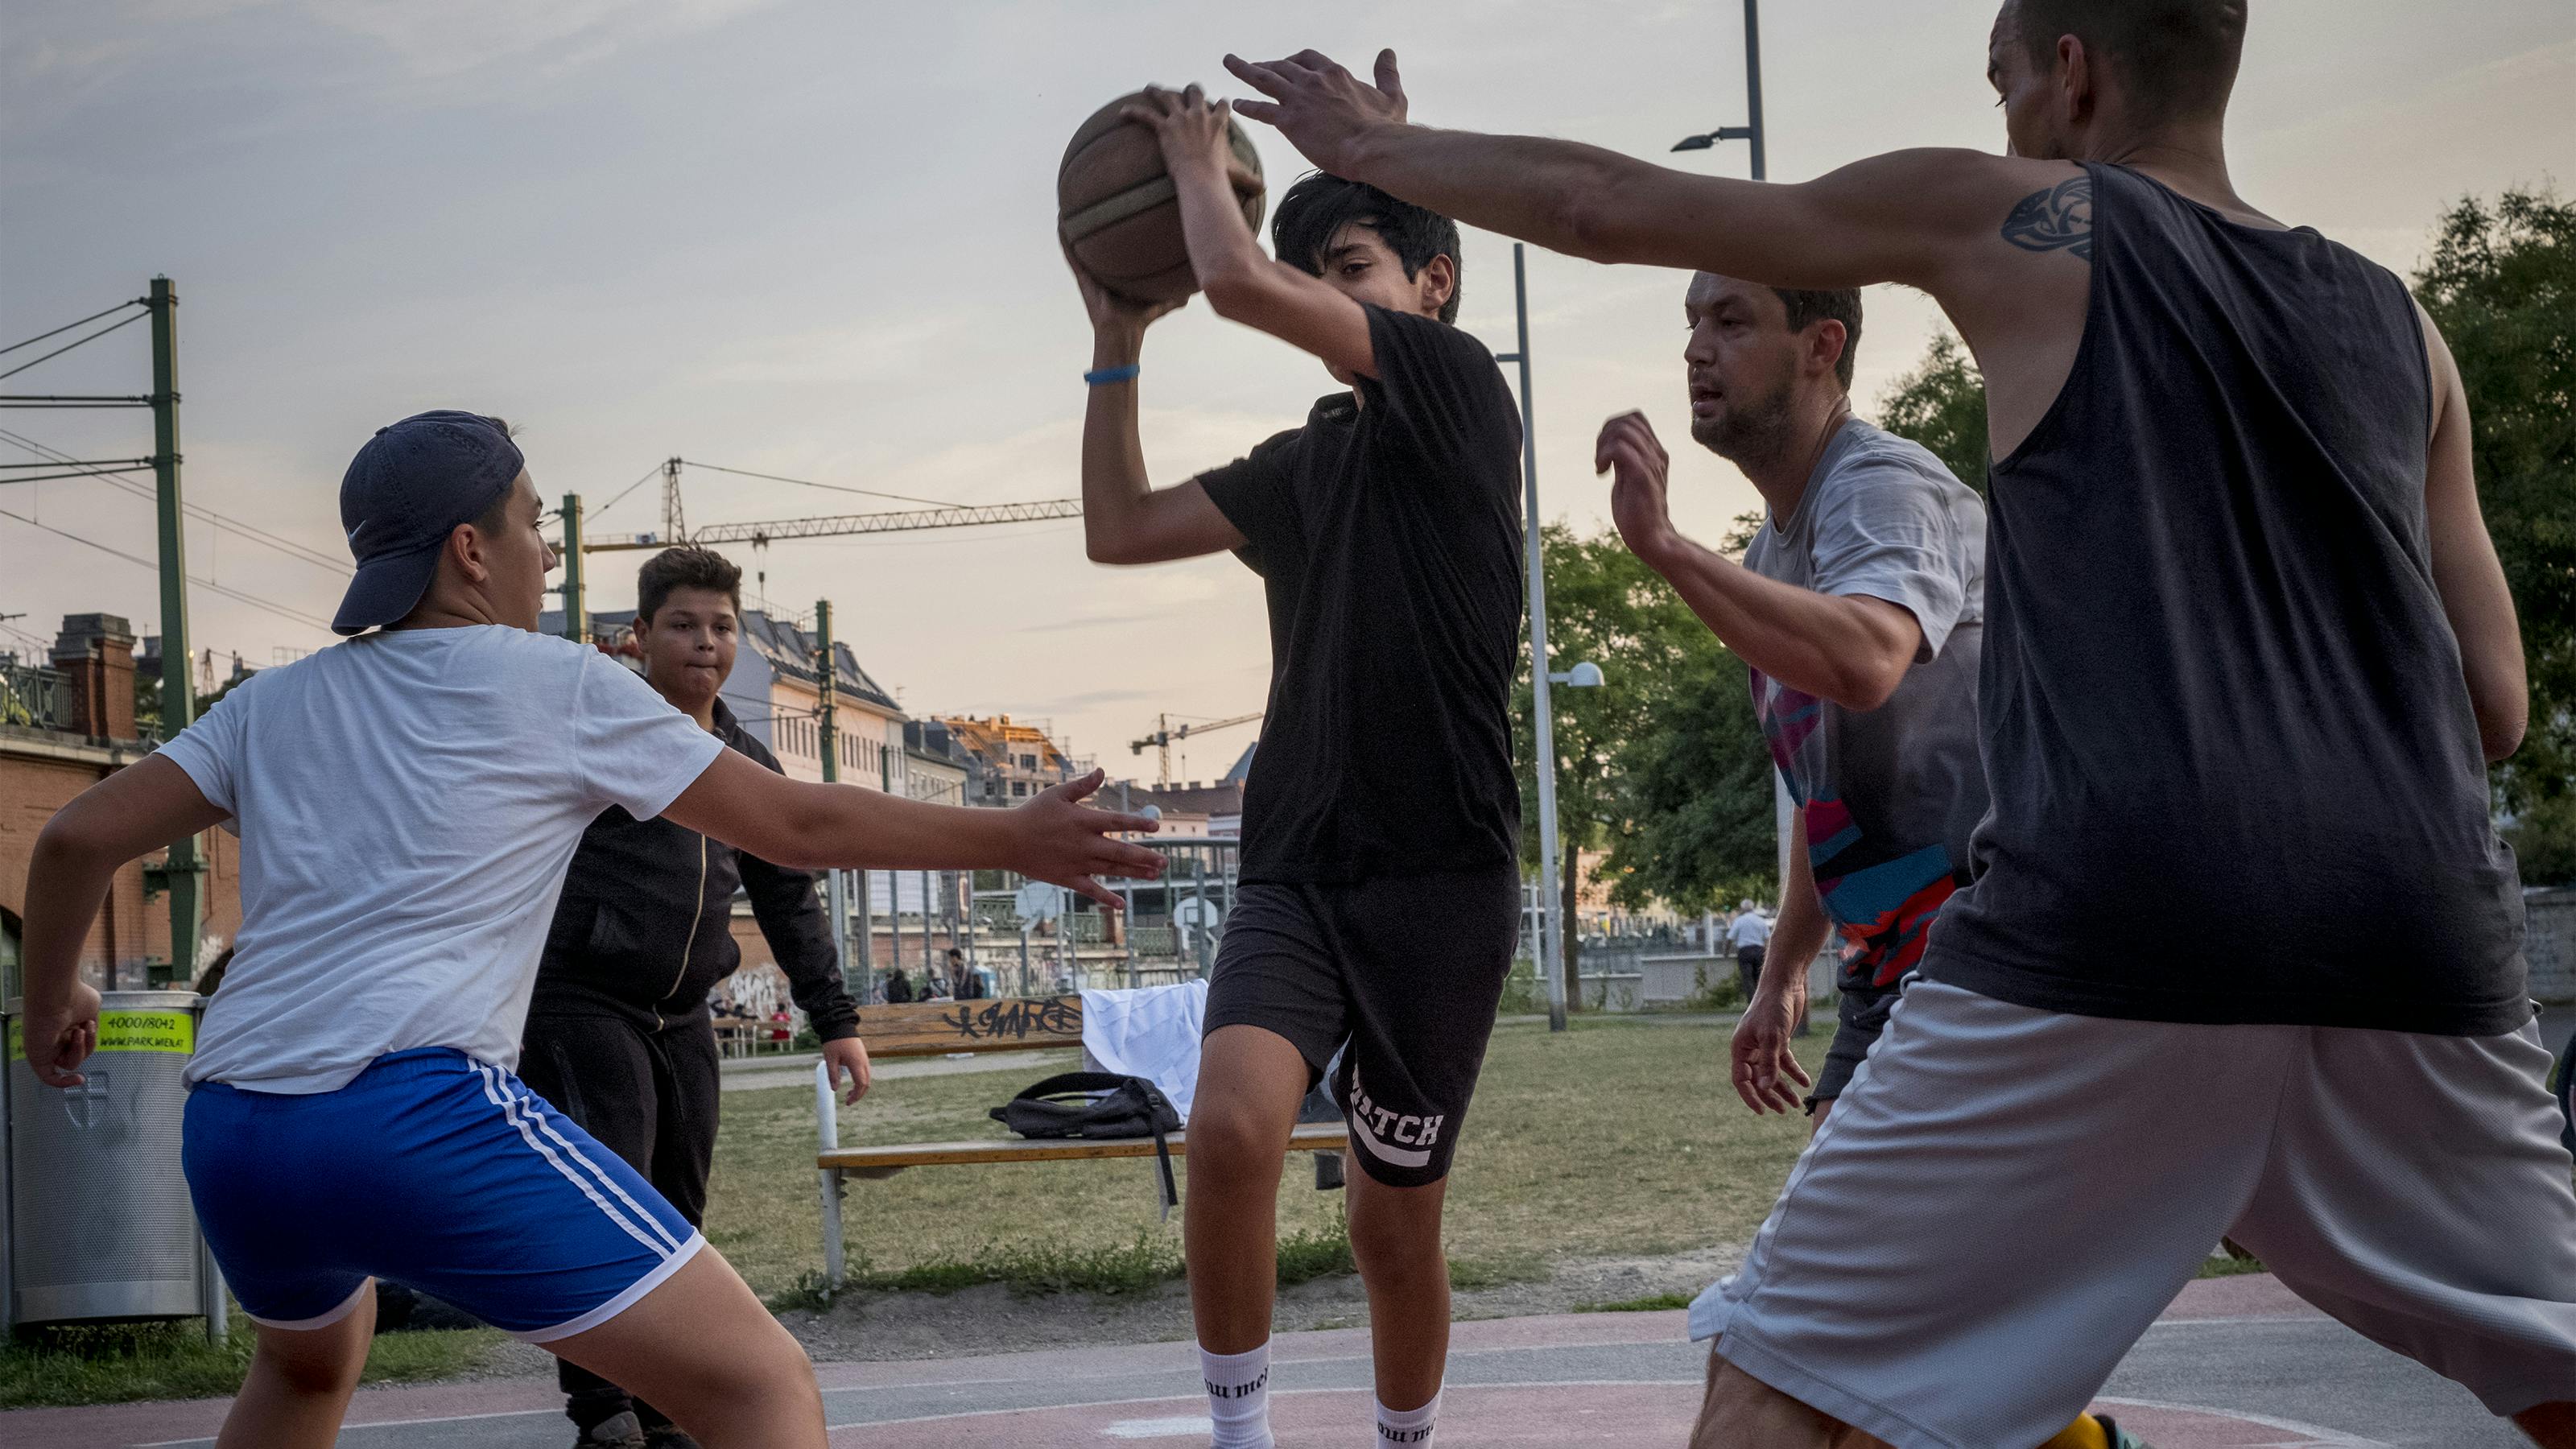 Ragazzi rifugiati giocano a basket